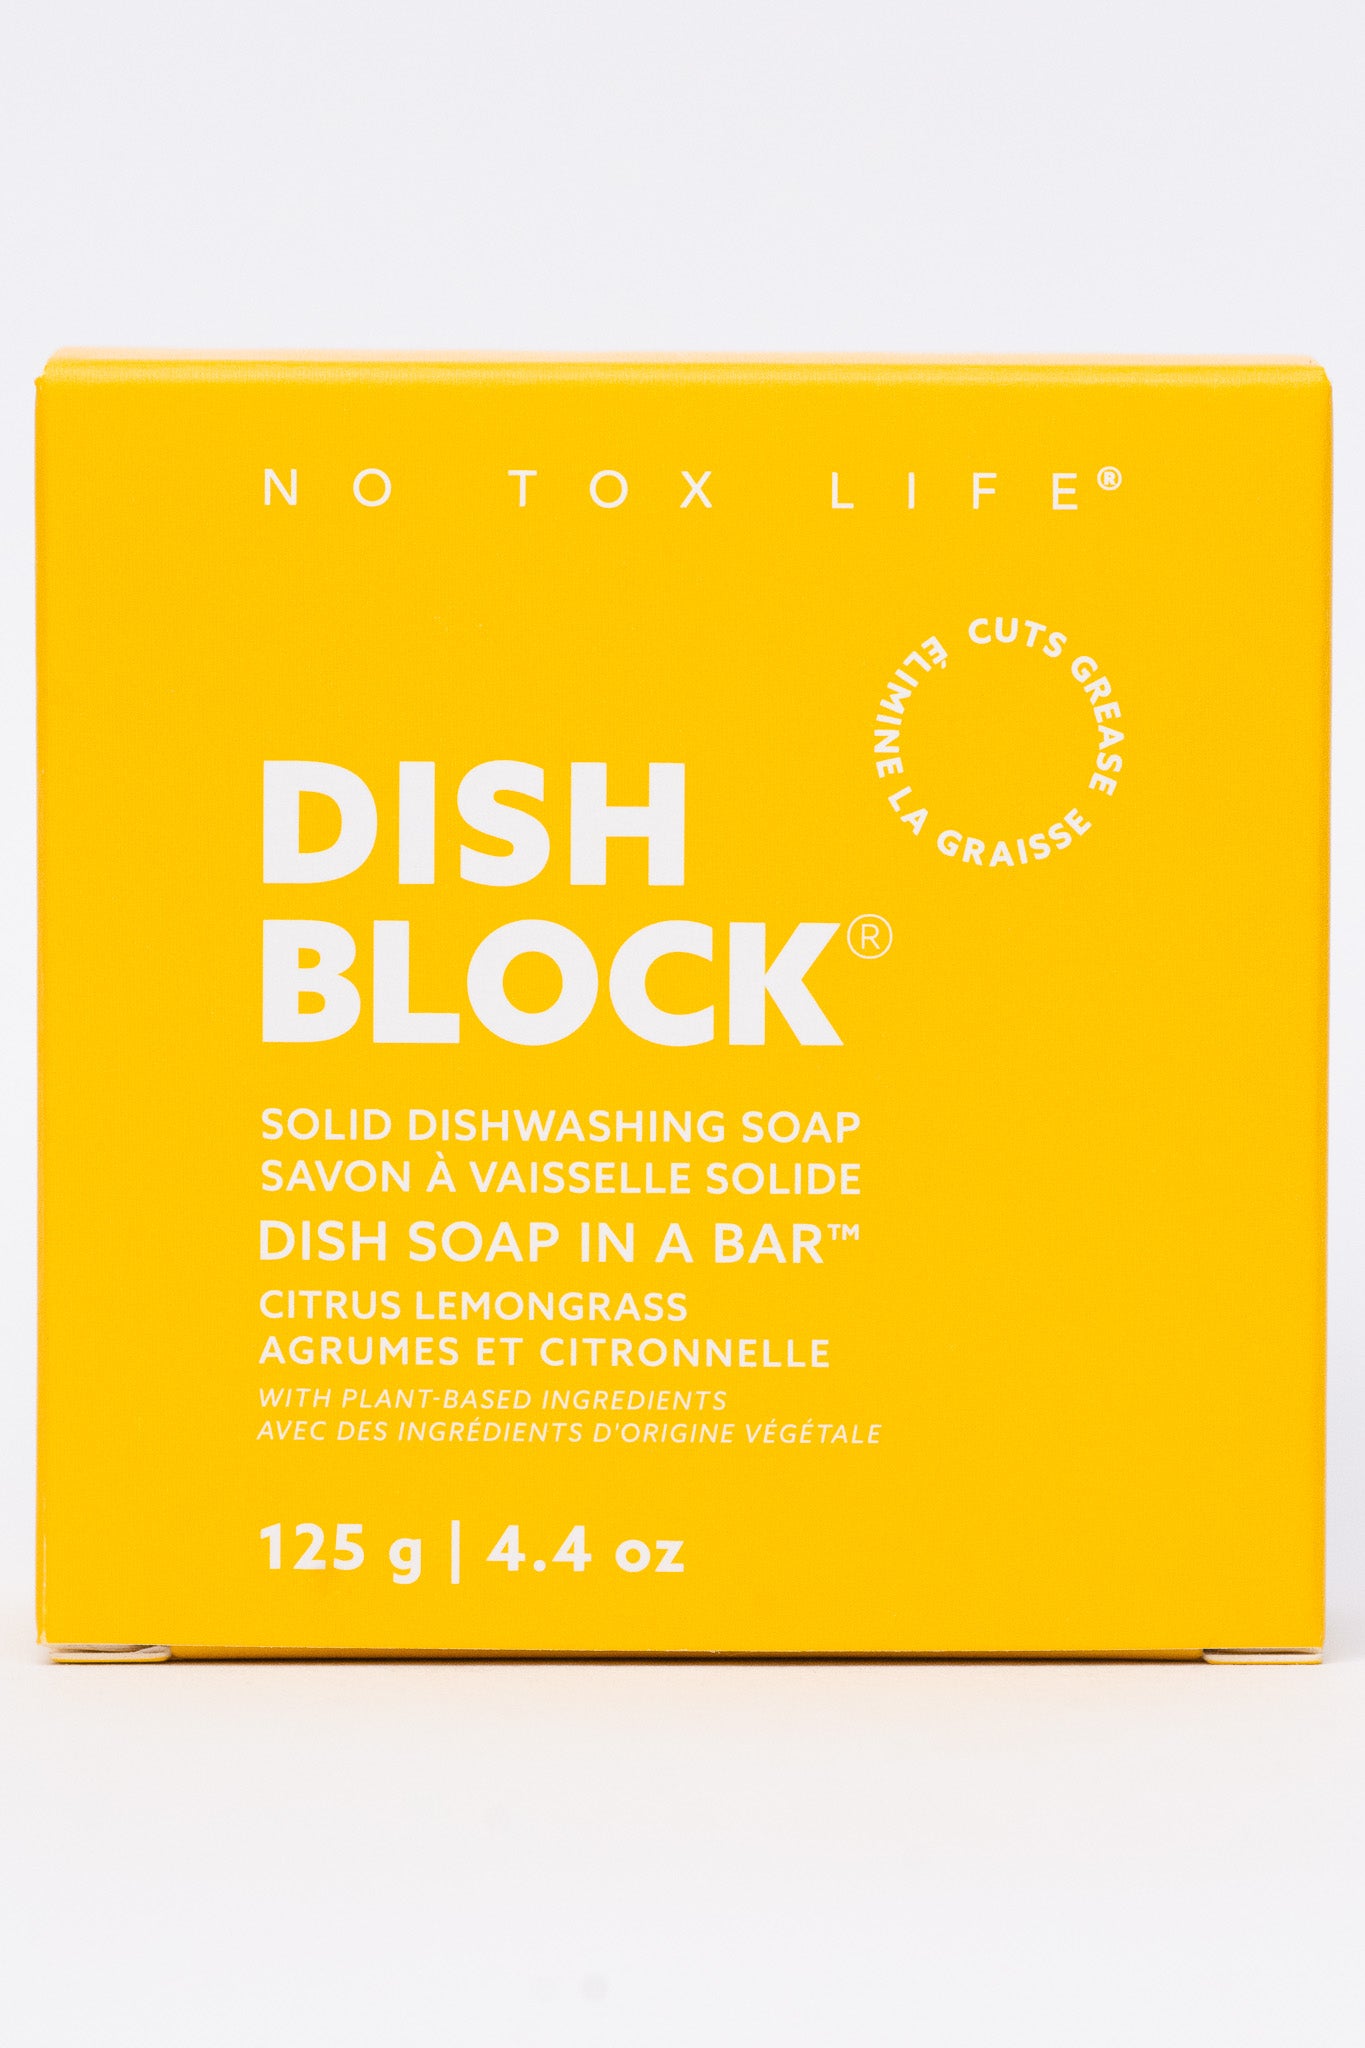 DISH BLOCK® solid dish soap - 4.4 oz (125g) bar - Citrus Lemongrass